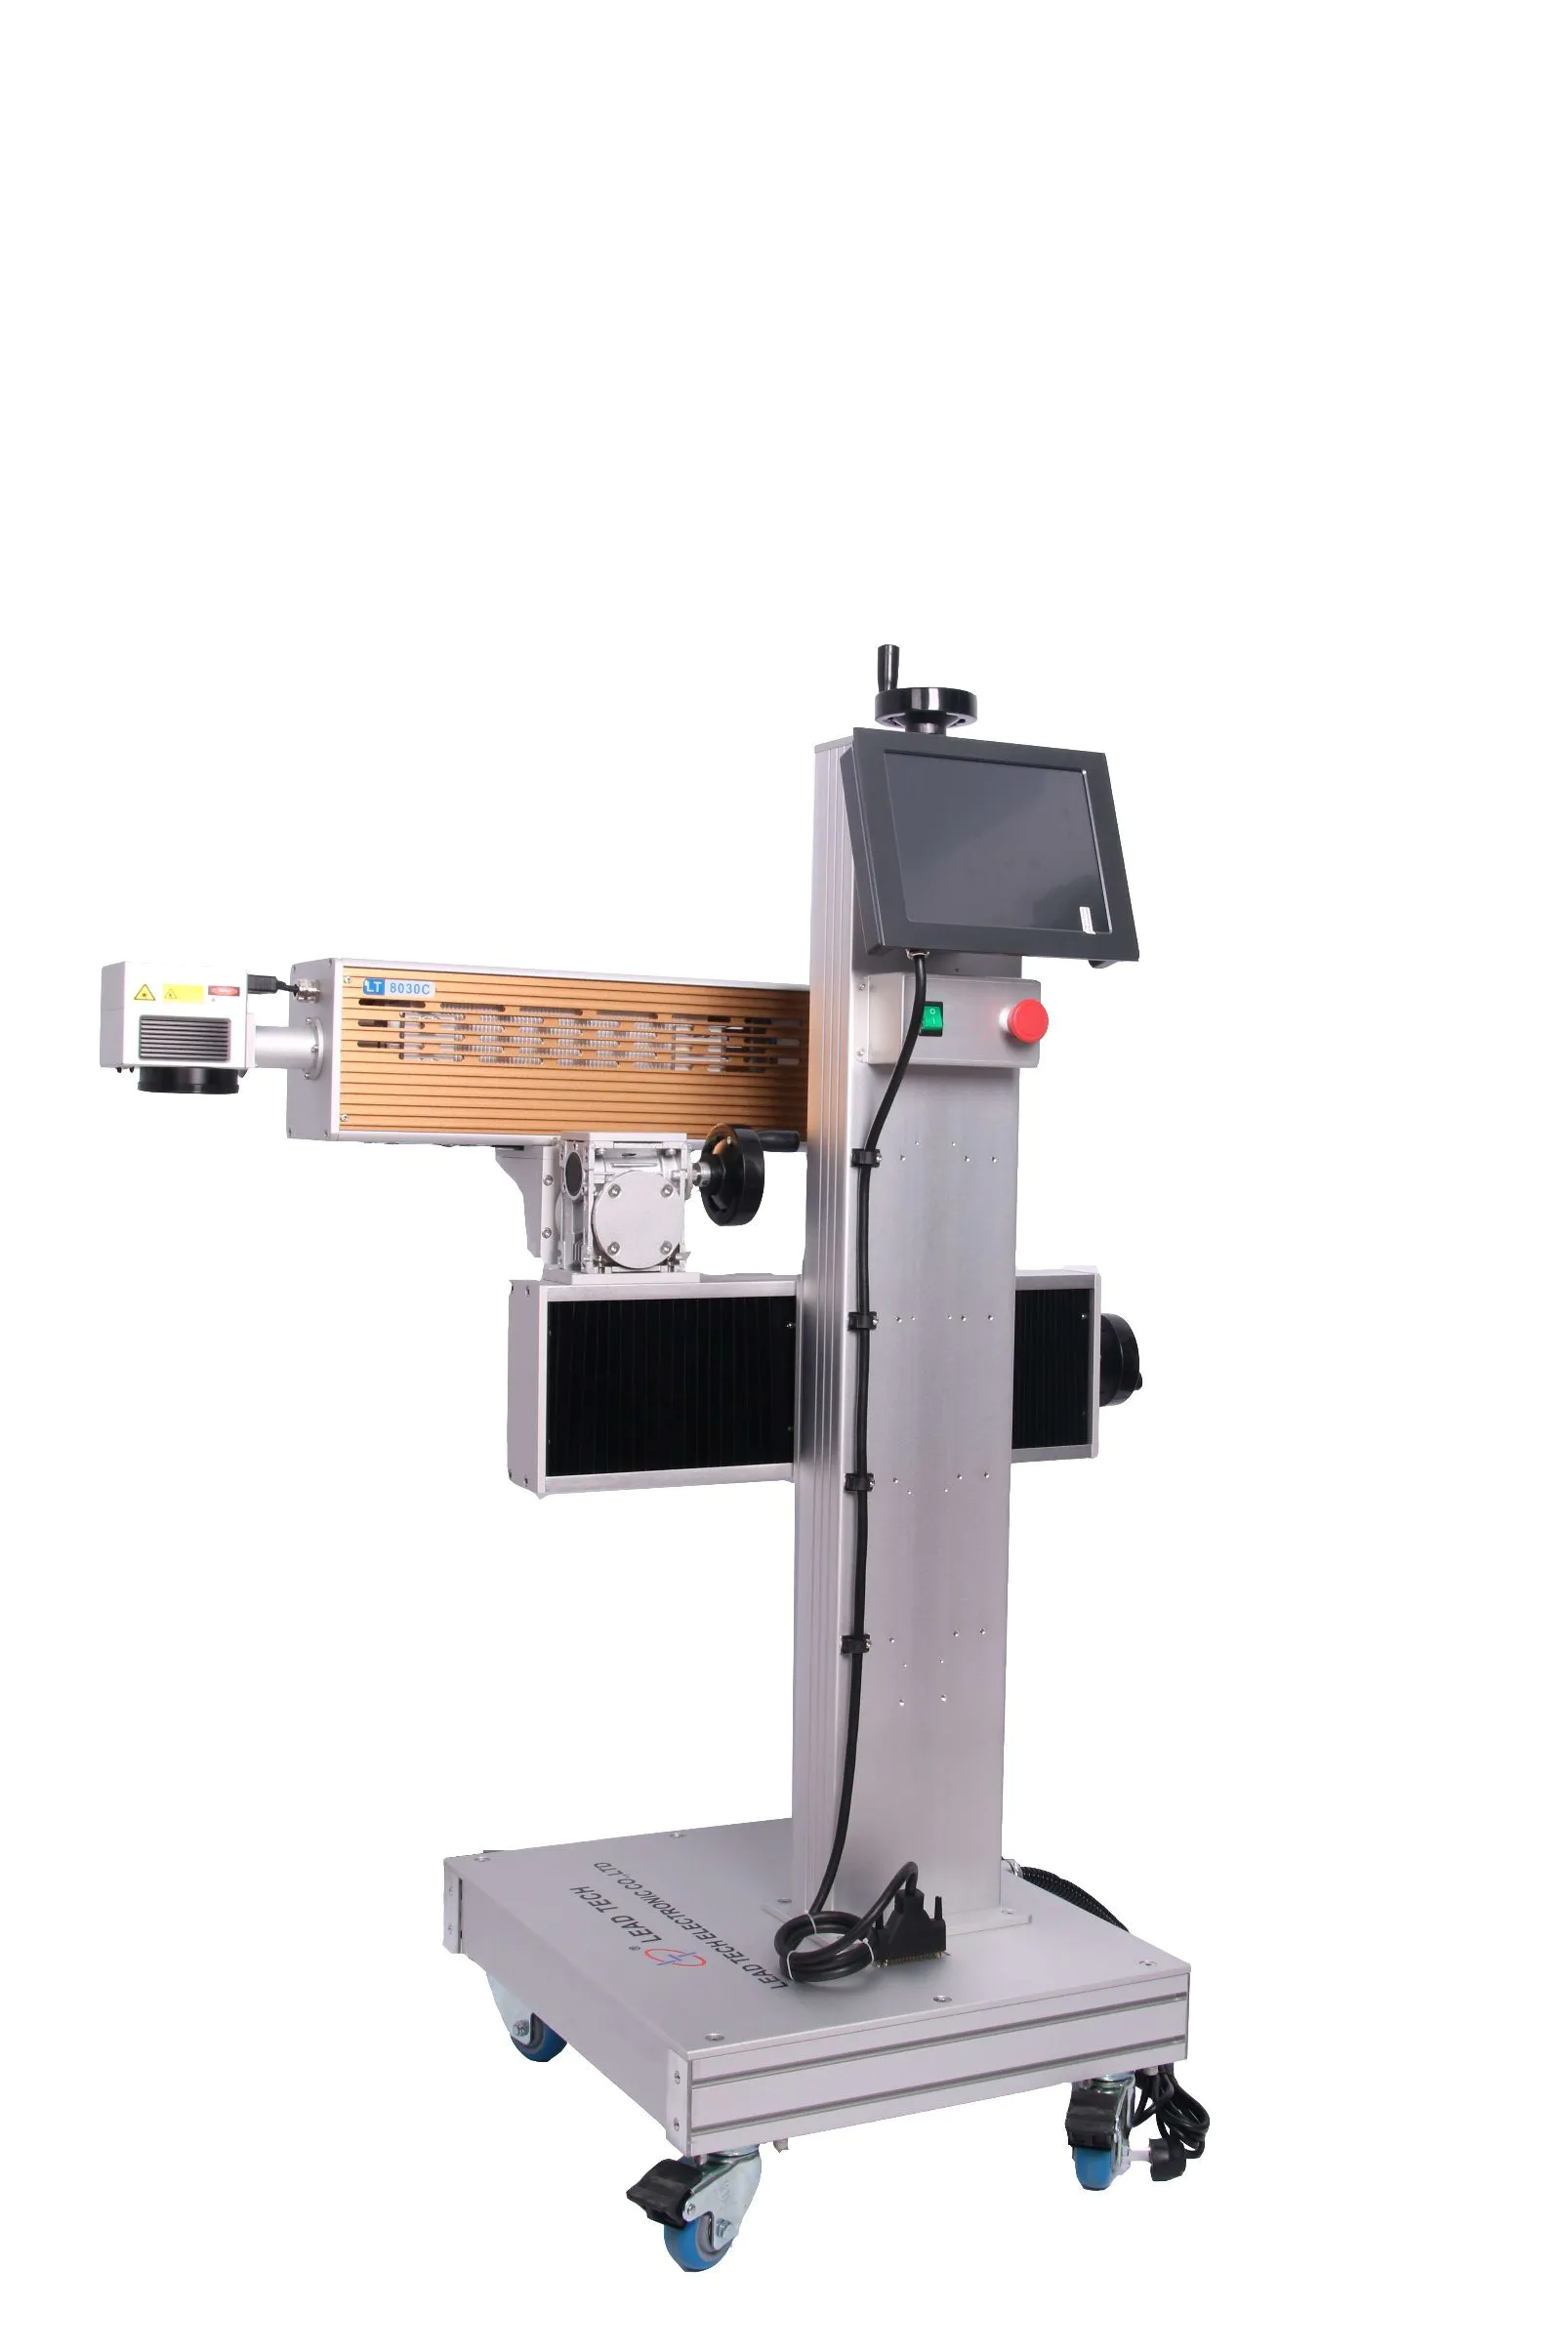 Lt8020c/Lt8030c CO2 20W/30W Digital High Speed Laser Printer for Stainless Steel